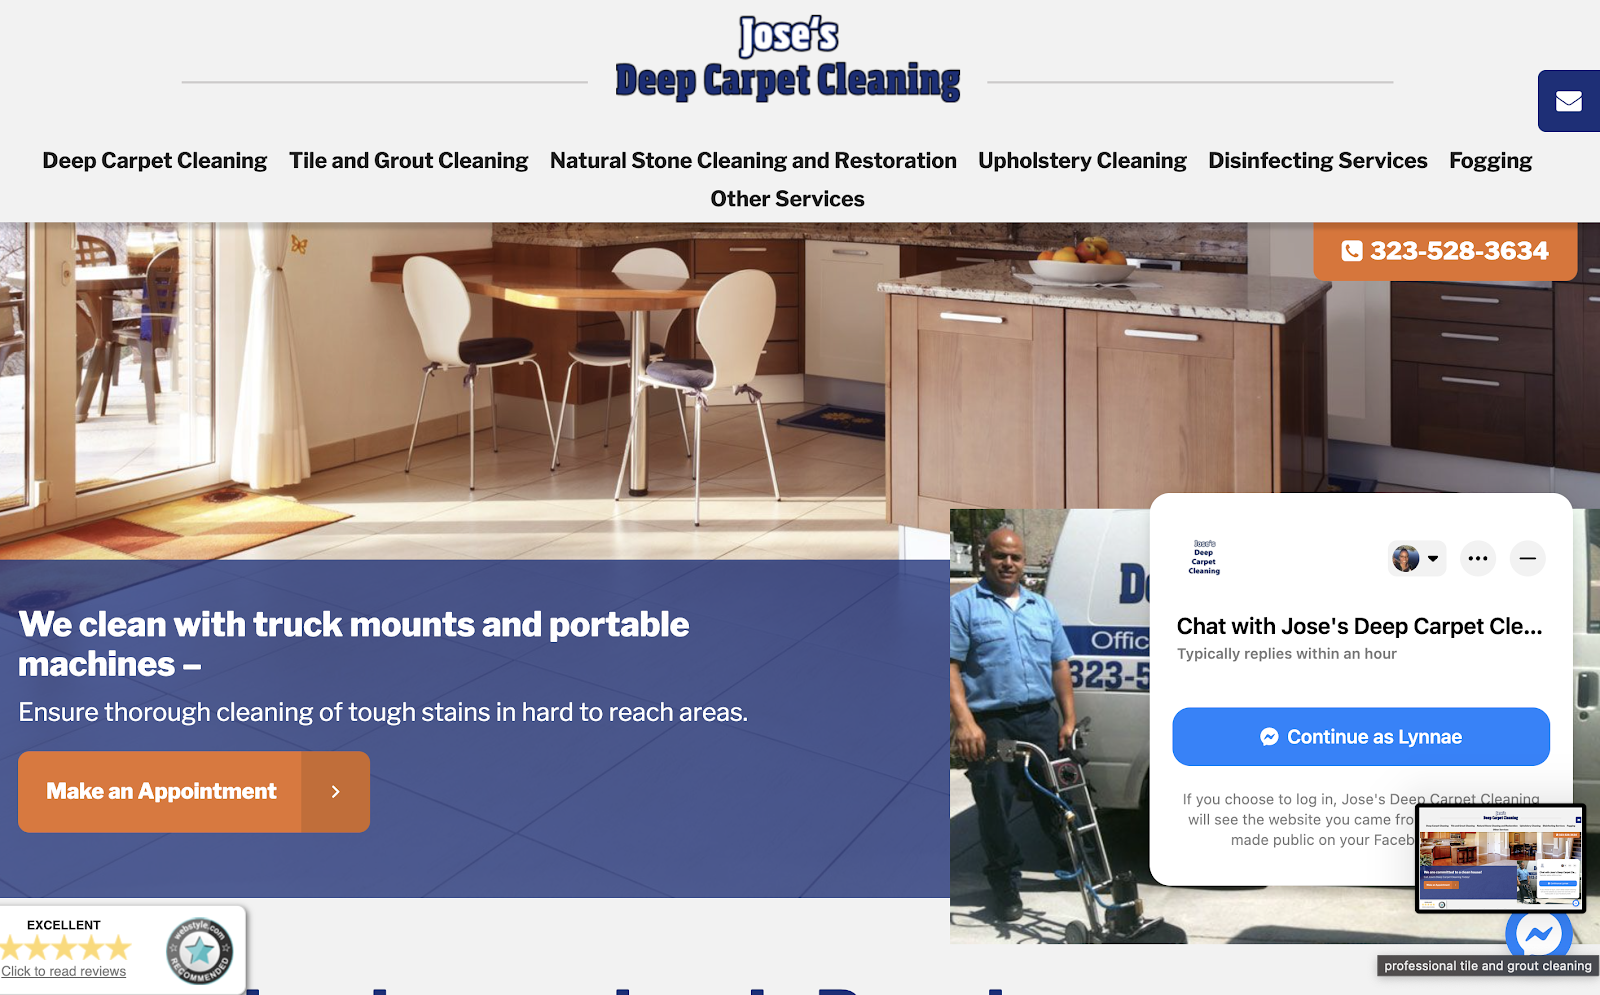 jose's deep carpet cleaning website